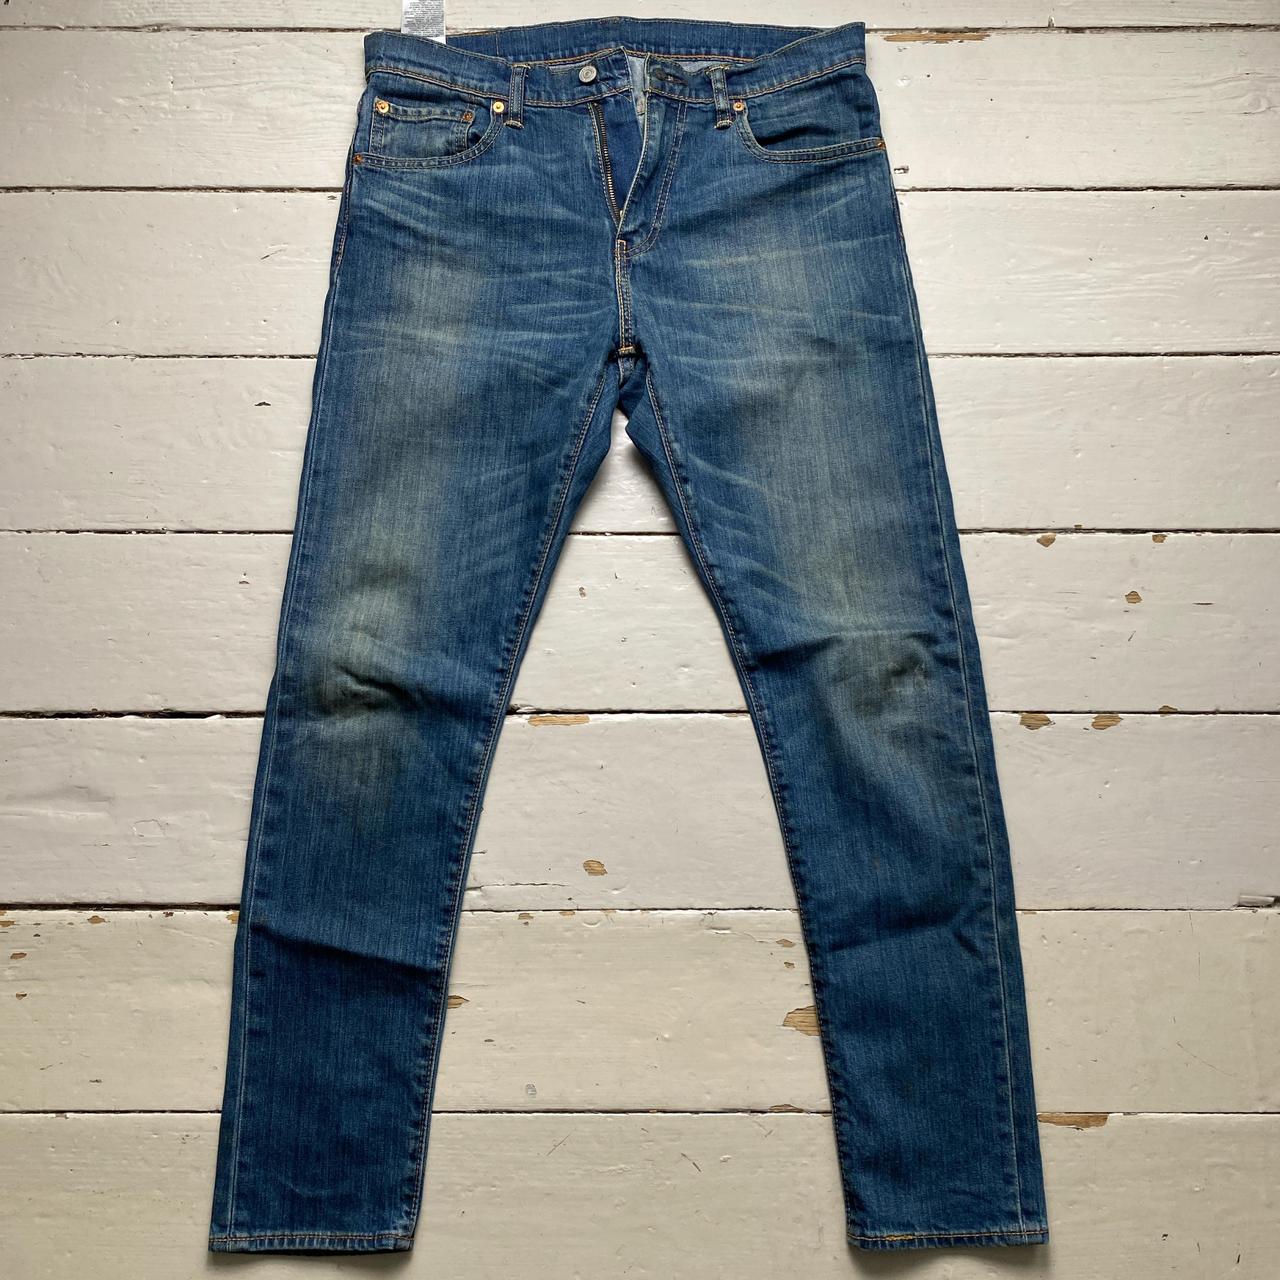 Levis 520 Navy Stonewash Jeans